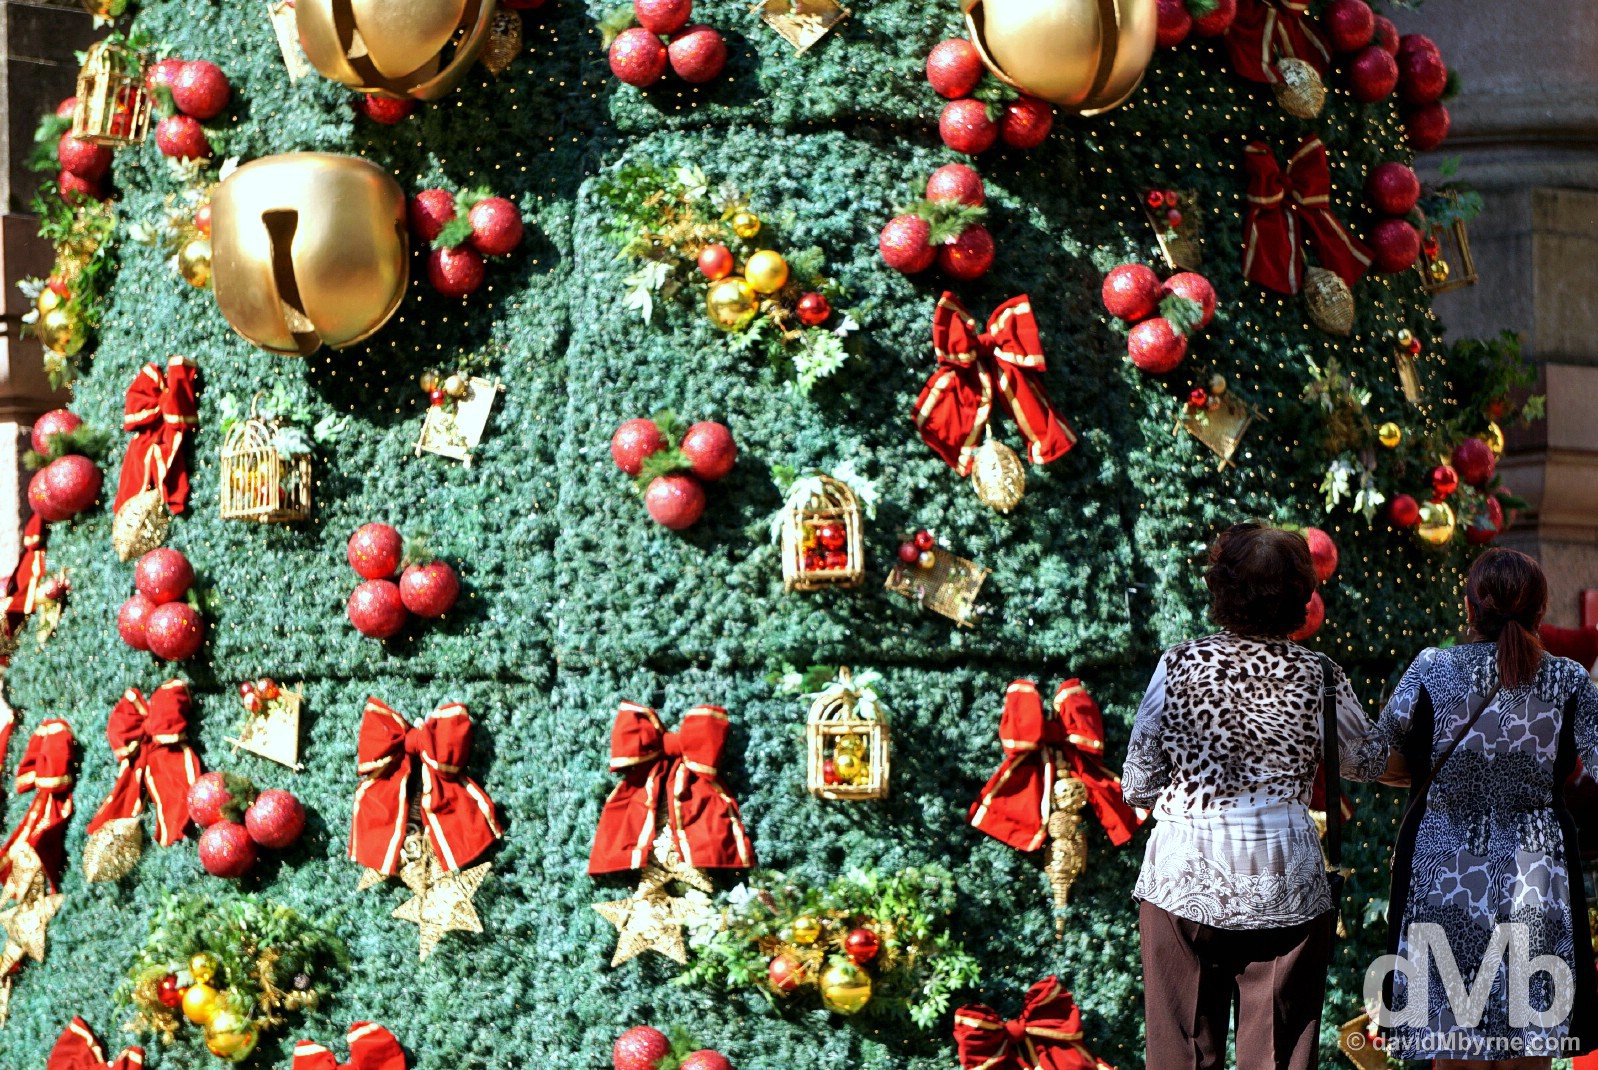 Admiring the massive Christmas tree in Alfandega Square in central Porto Alegre, Brazil. December 8, 2015.